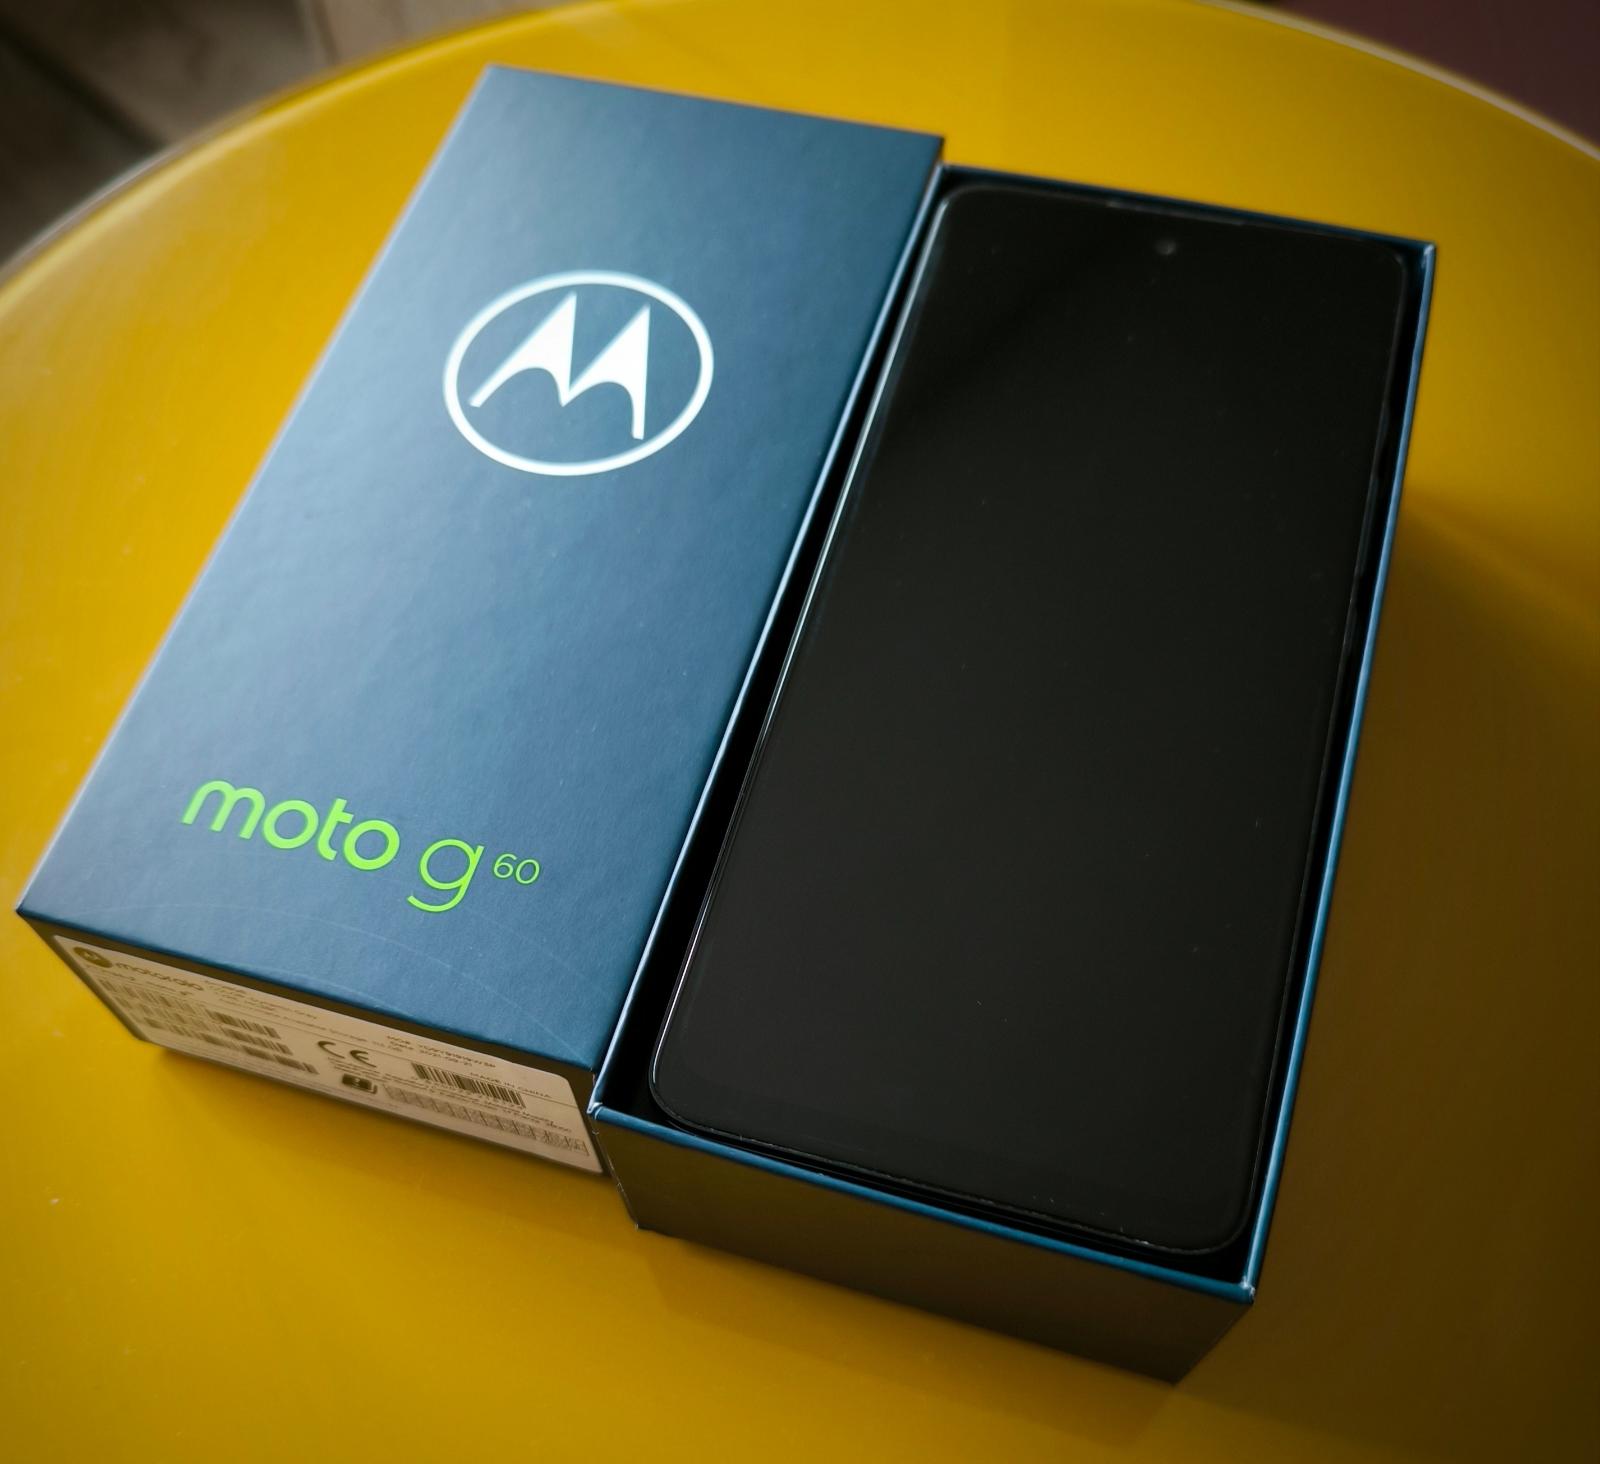 Motorola moto g60 - Mobily a smart elektronika